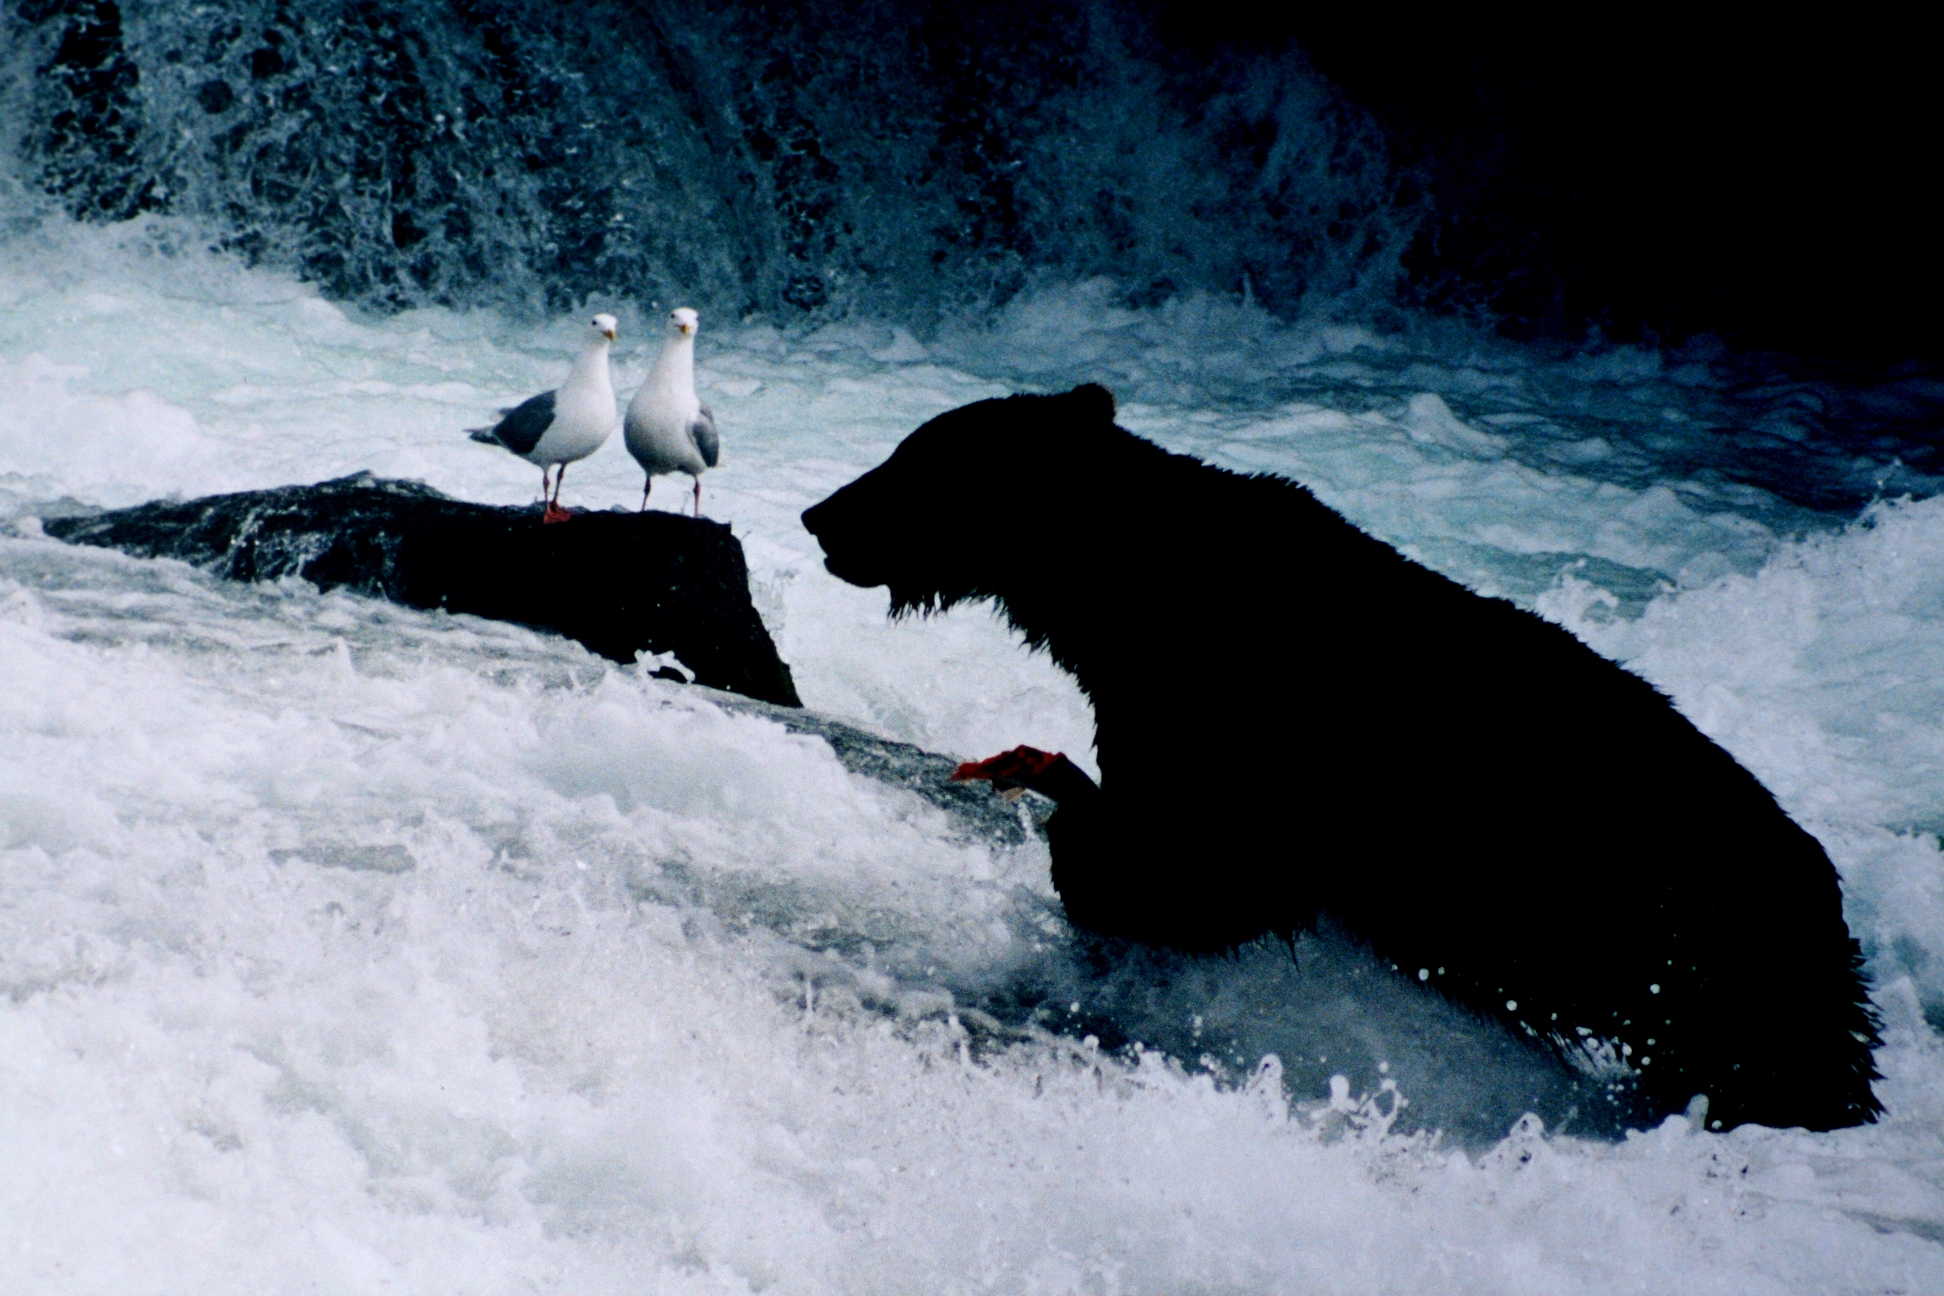 Bear in a river in Alaska